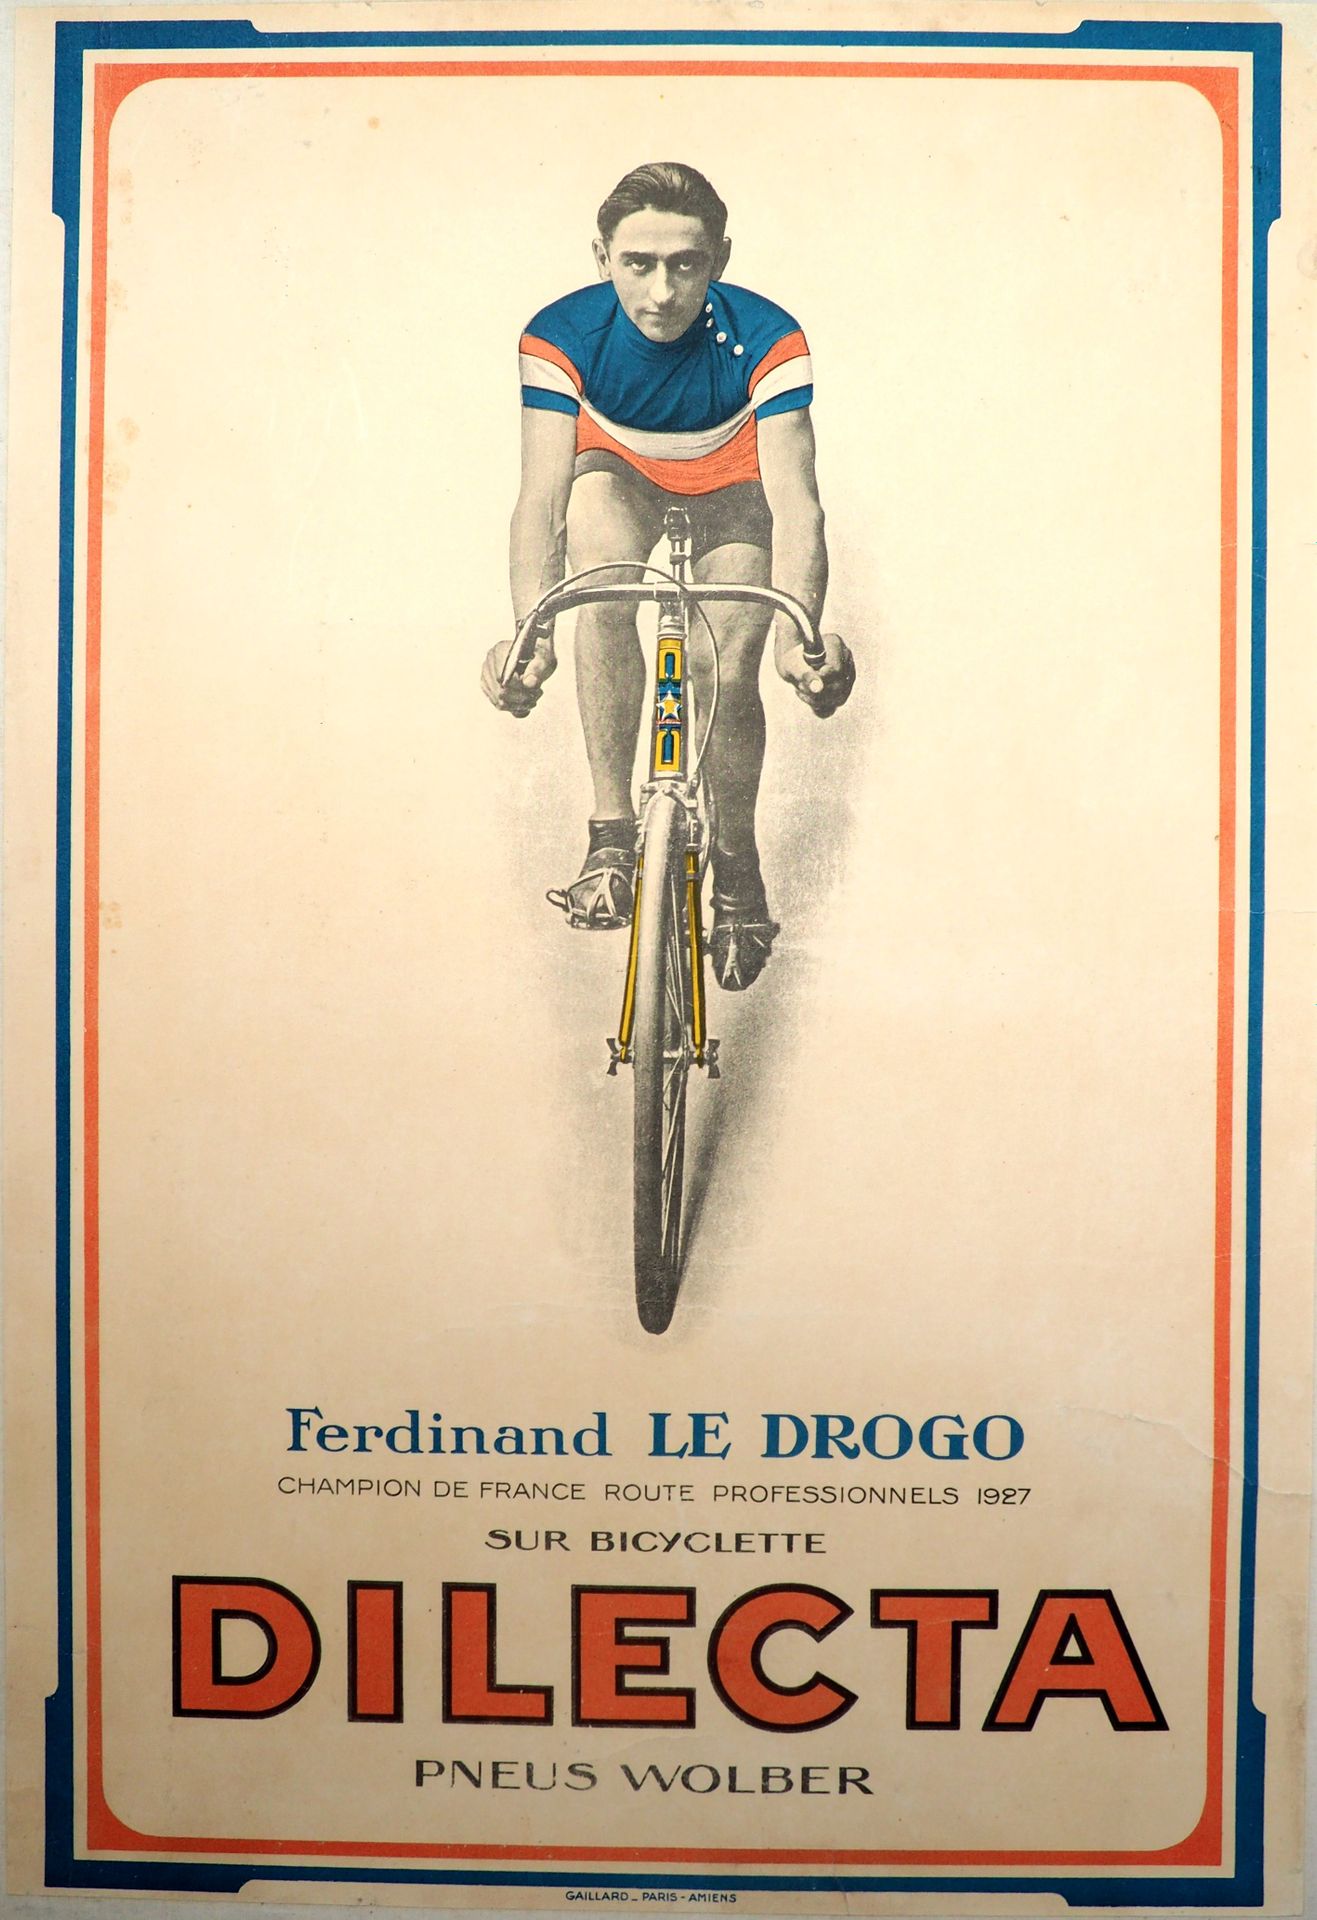 Null Cyclisme/Dilecta/F.Le Drogo/Bretagne/Tricolore. Affiche entoilée : "Ferdina&hellip;